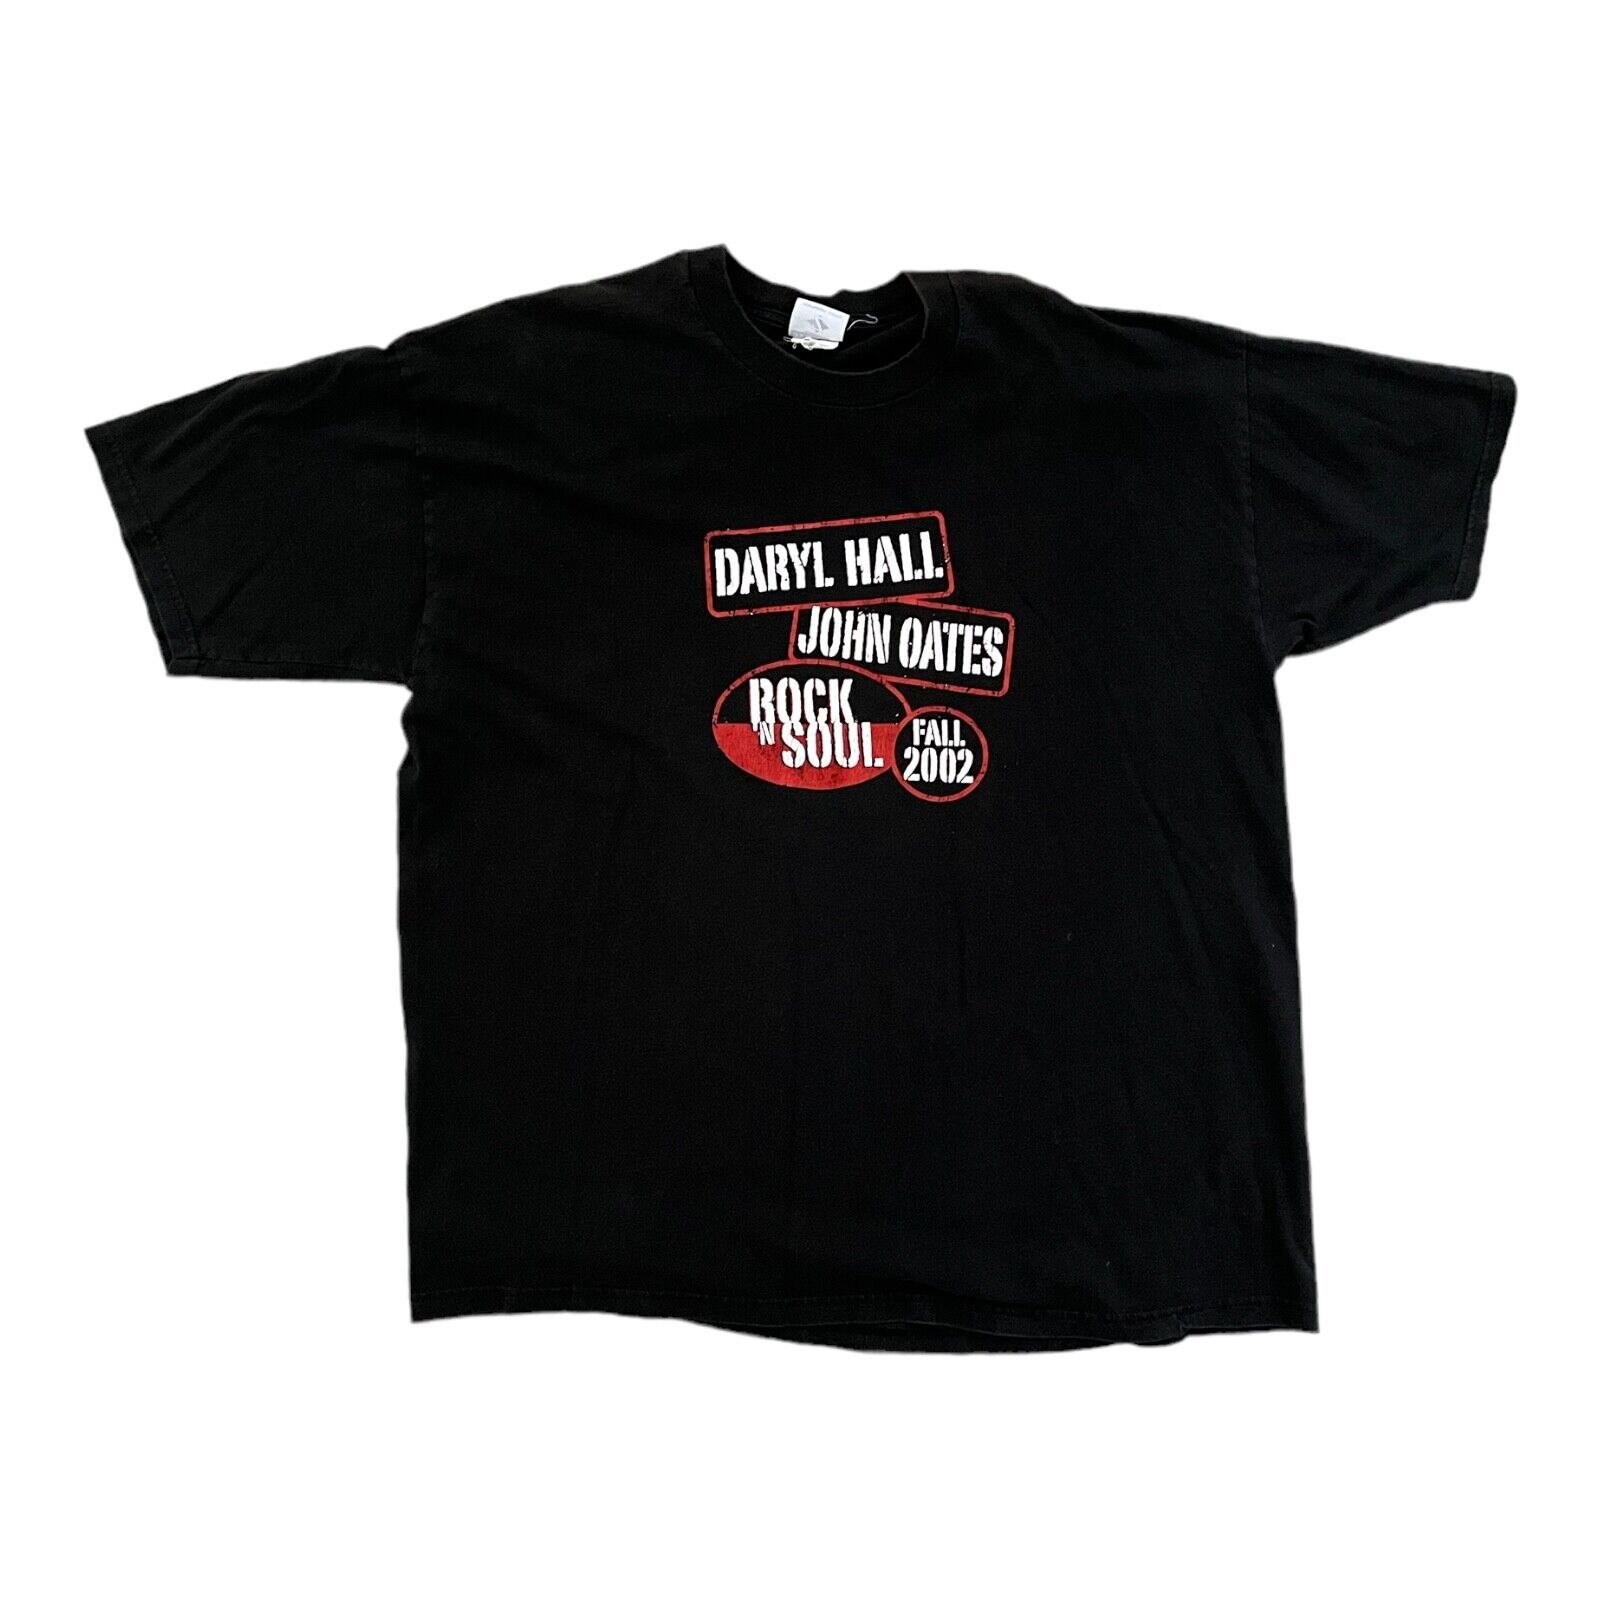 2002 Hall And Oates Rock N Soul Tour Shirt